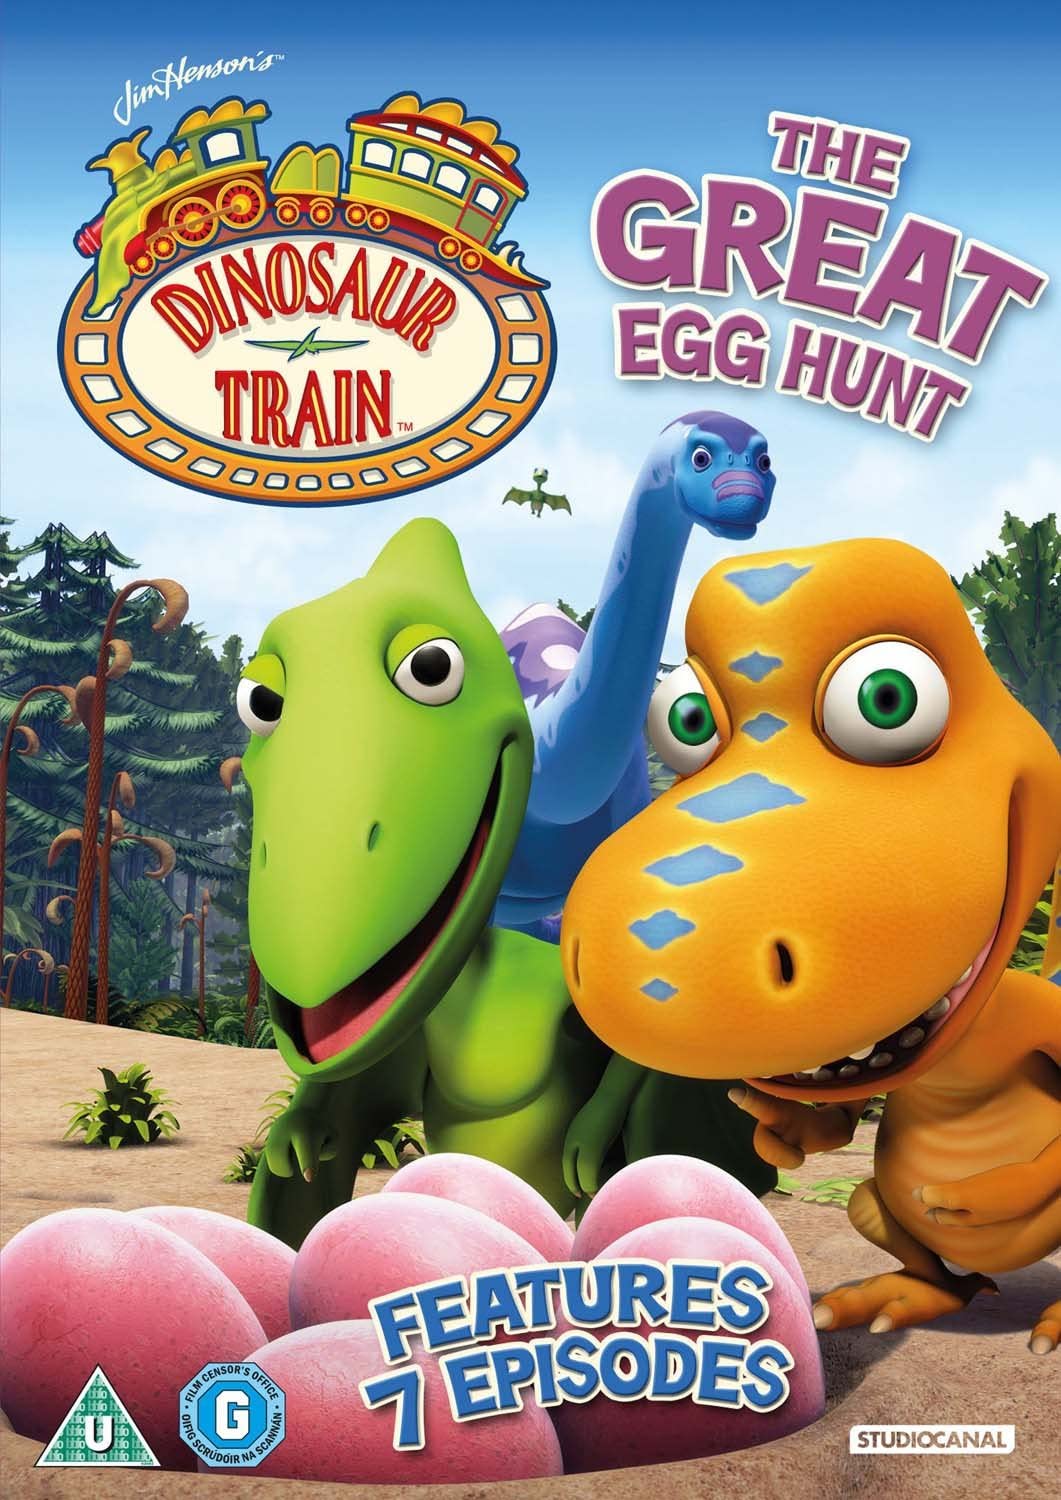 Dinosaur Train - The Great Egg Hunt [2015] - Animation [DVD]